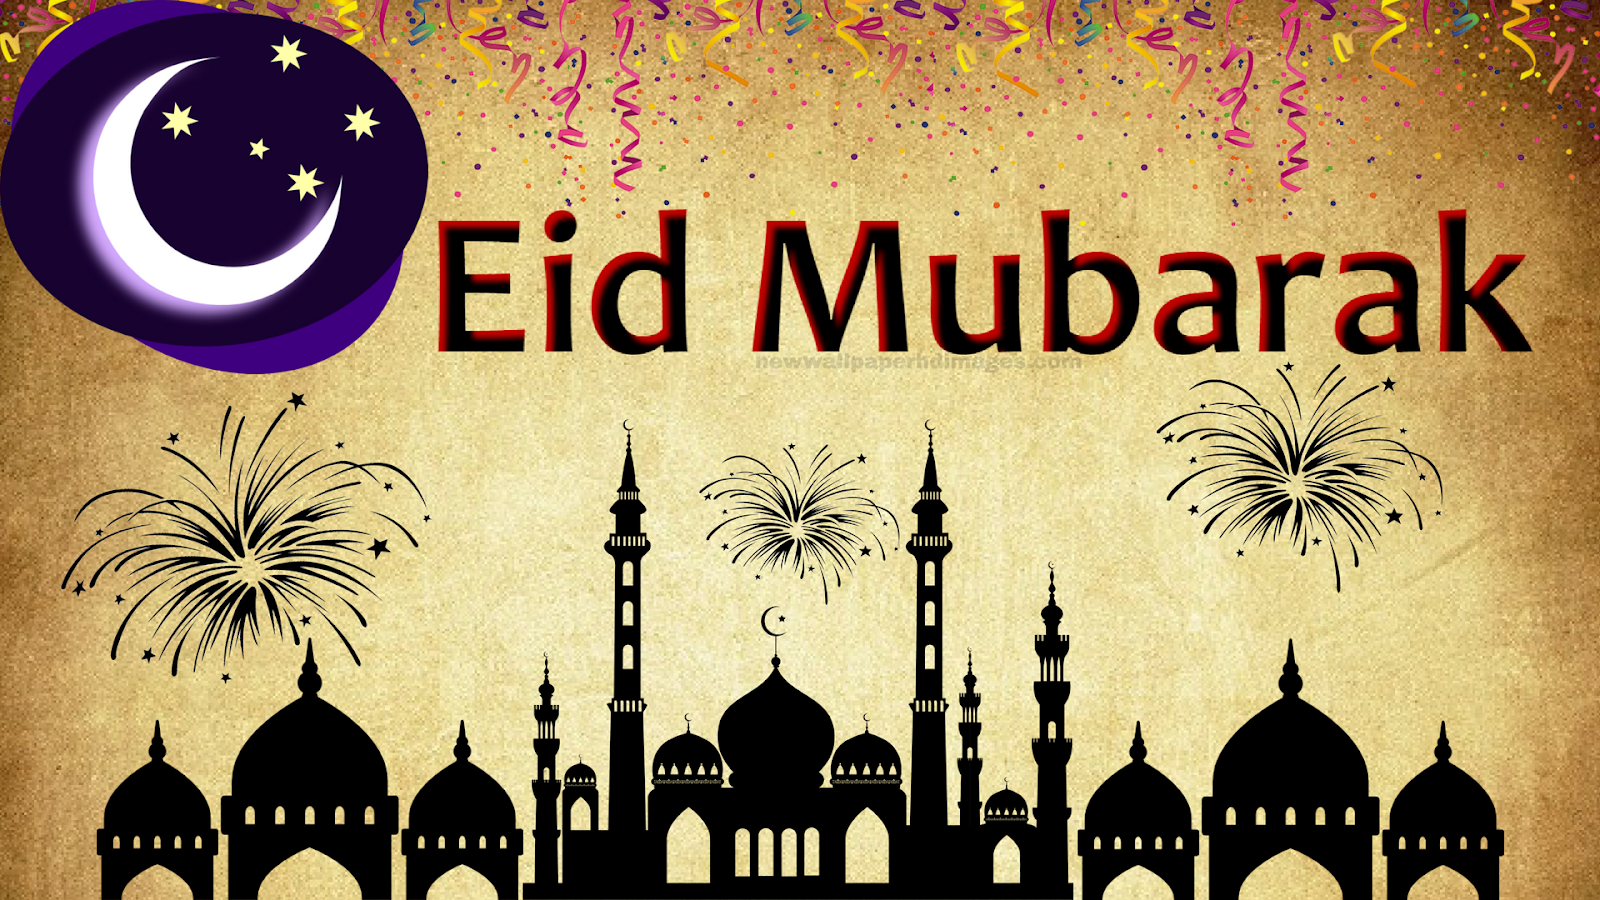 Top 20+ Eid Mubarak Best Images 2018 - Happy Eid